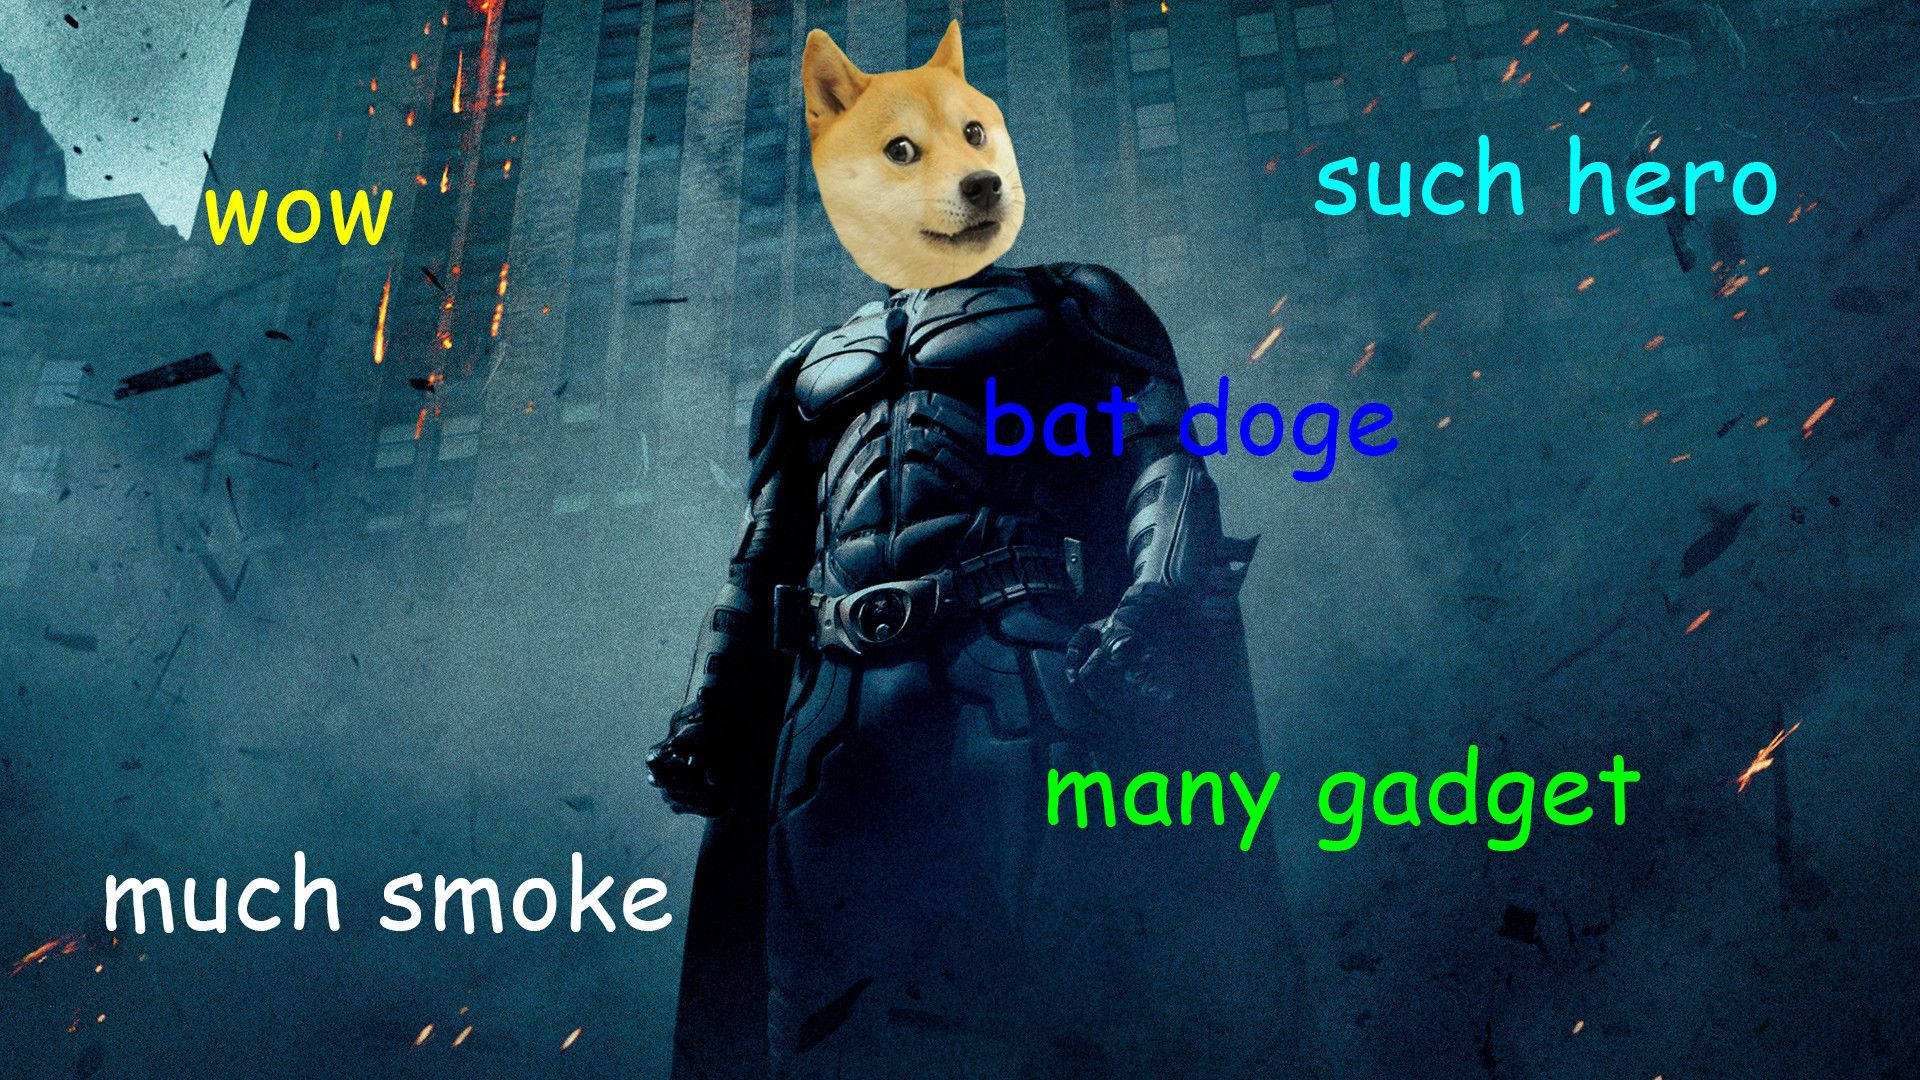 BatDoge Batman Doge Meme wallpaper